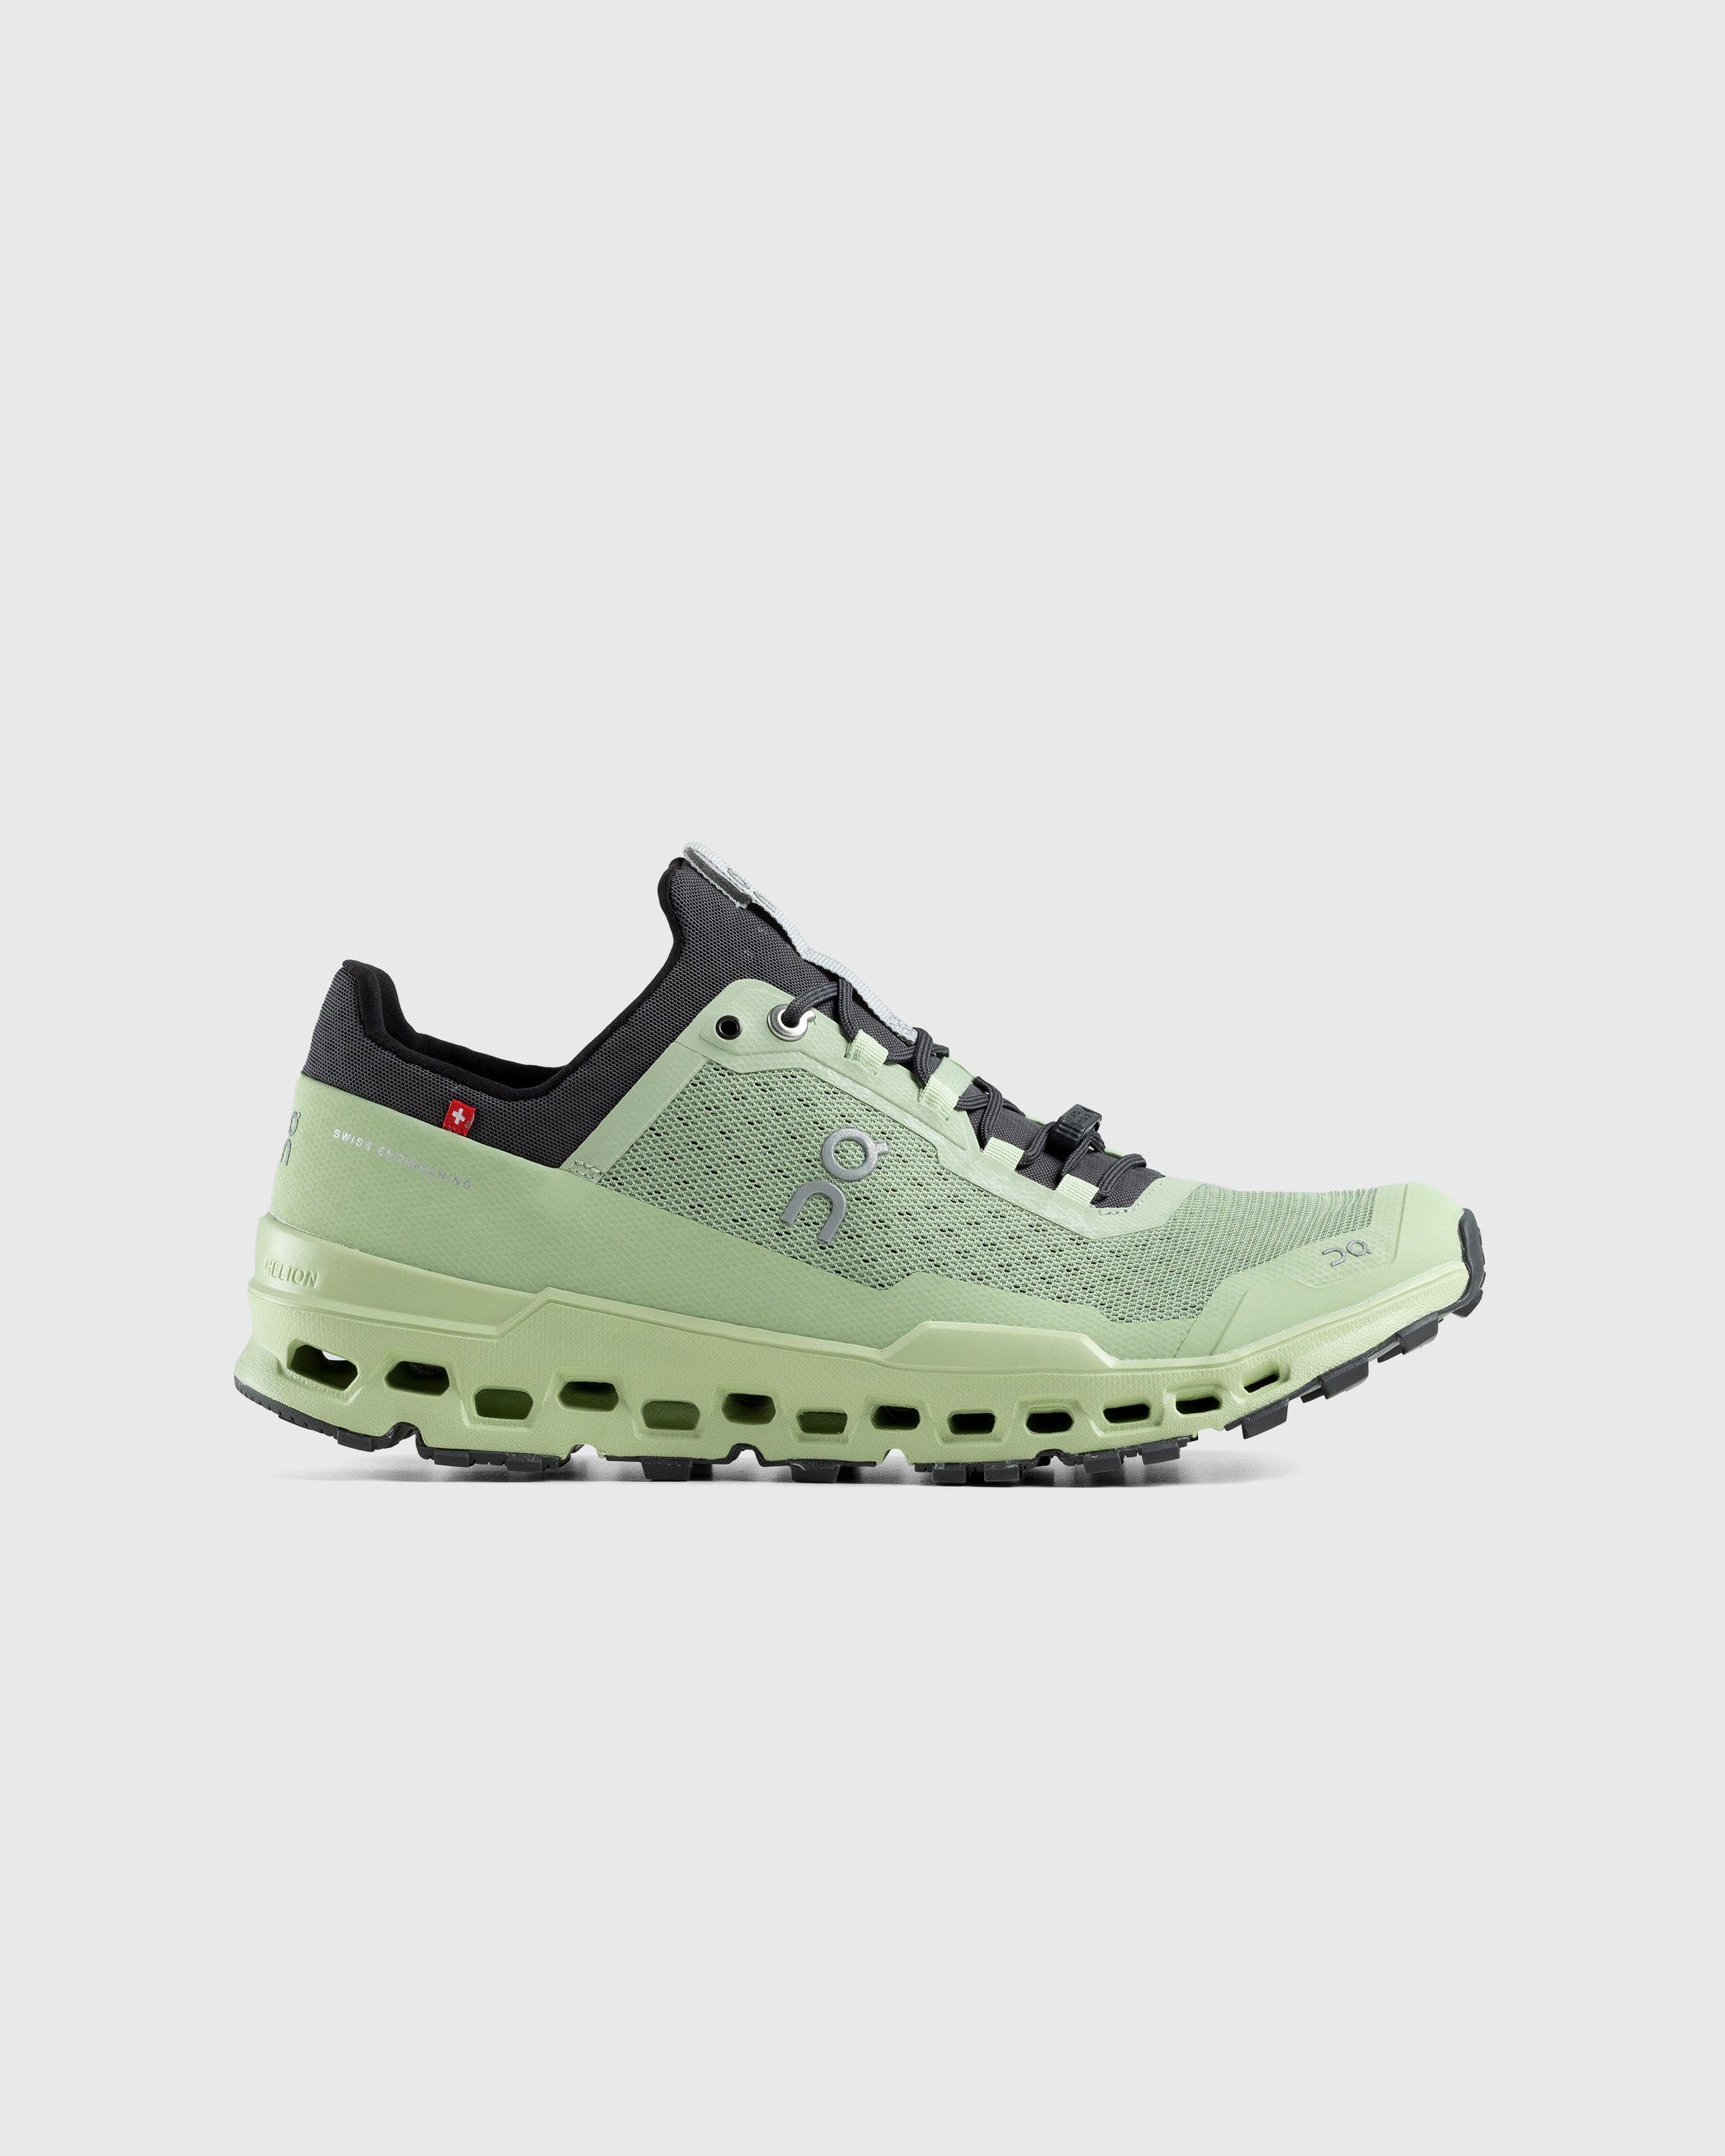 On - Cloudultra Vine/Meadow - Footwear - Green - Image 1